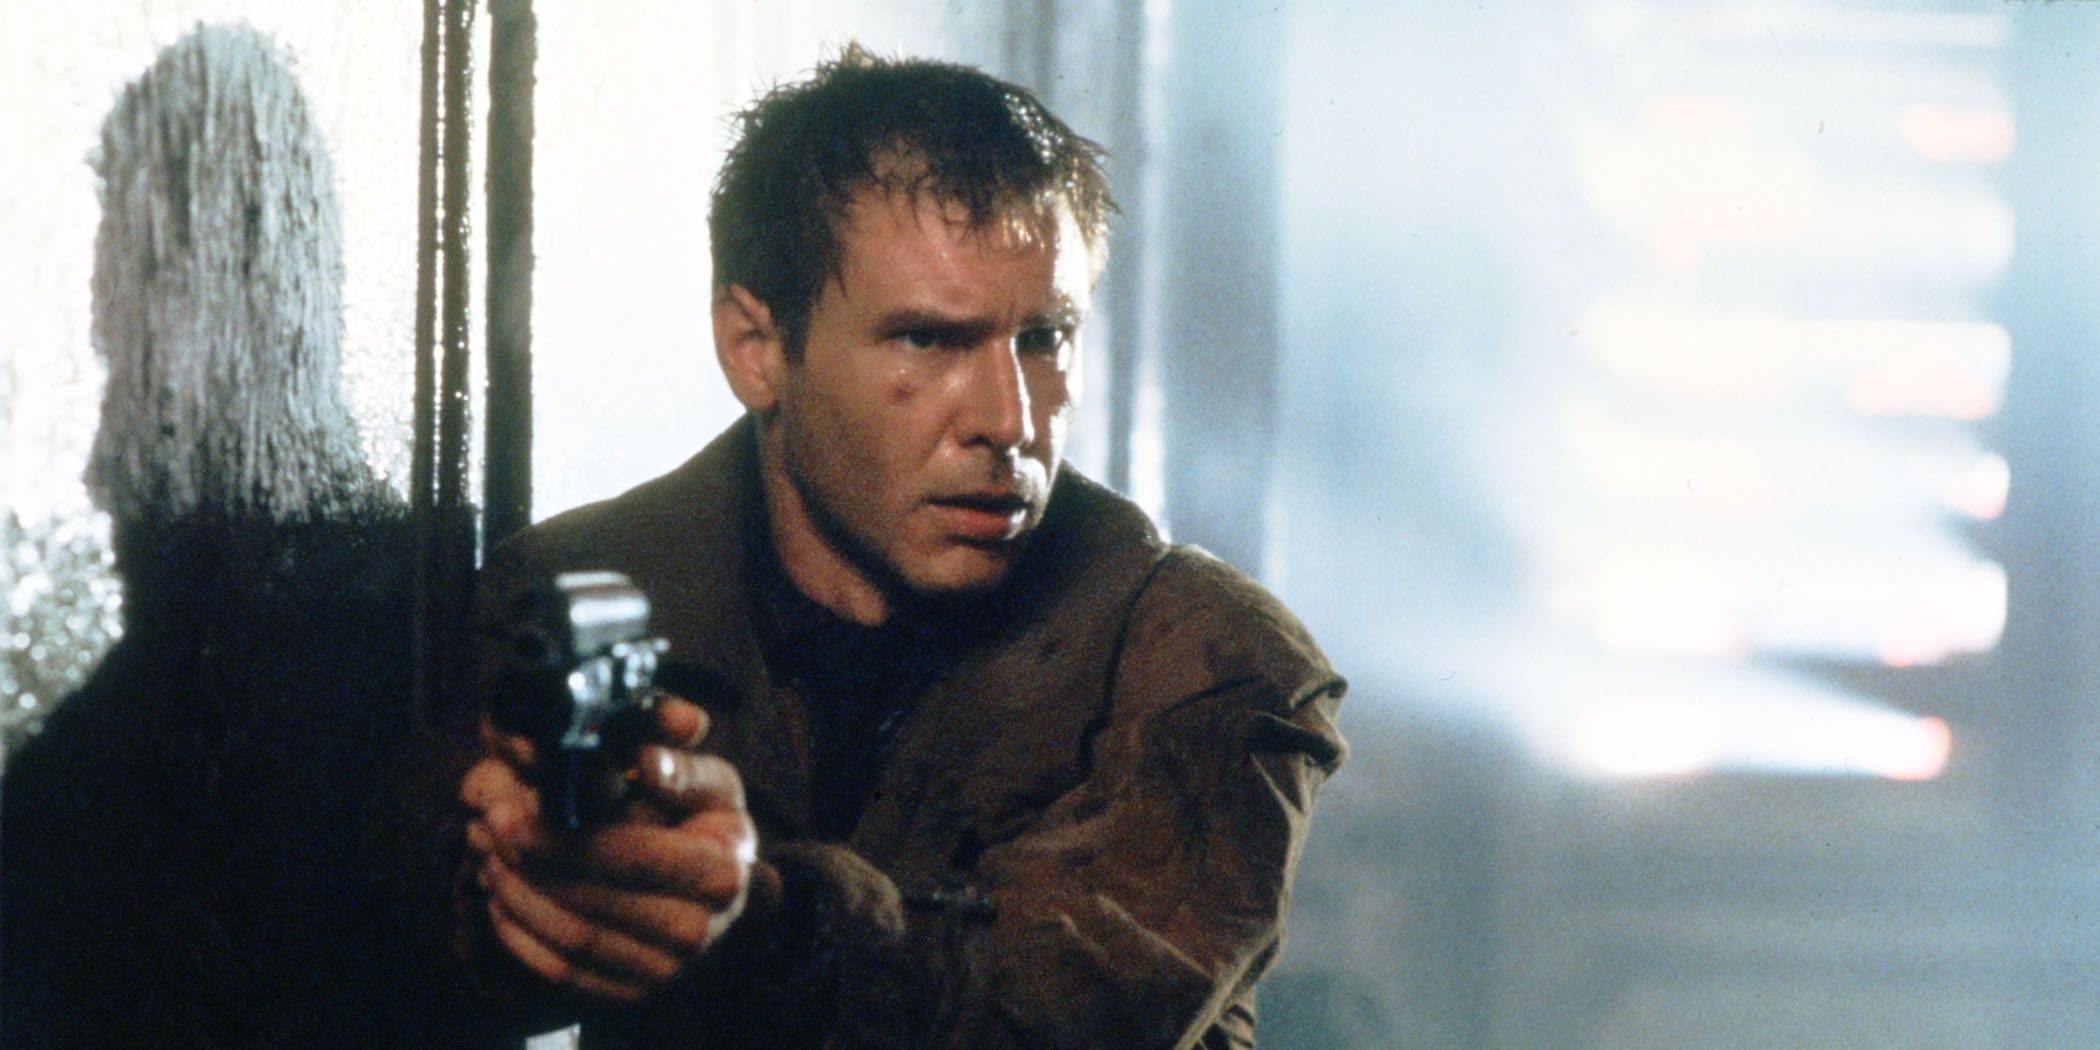 A photo still showing Rick Deckard pointing a gun in Blade Runner